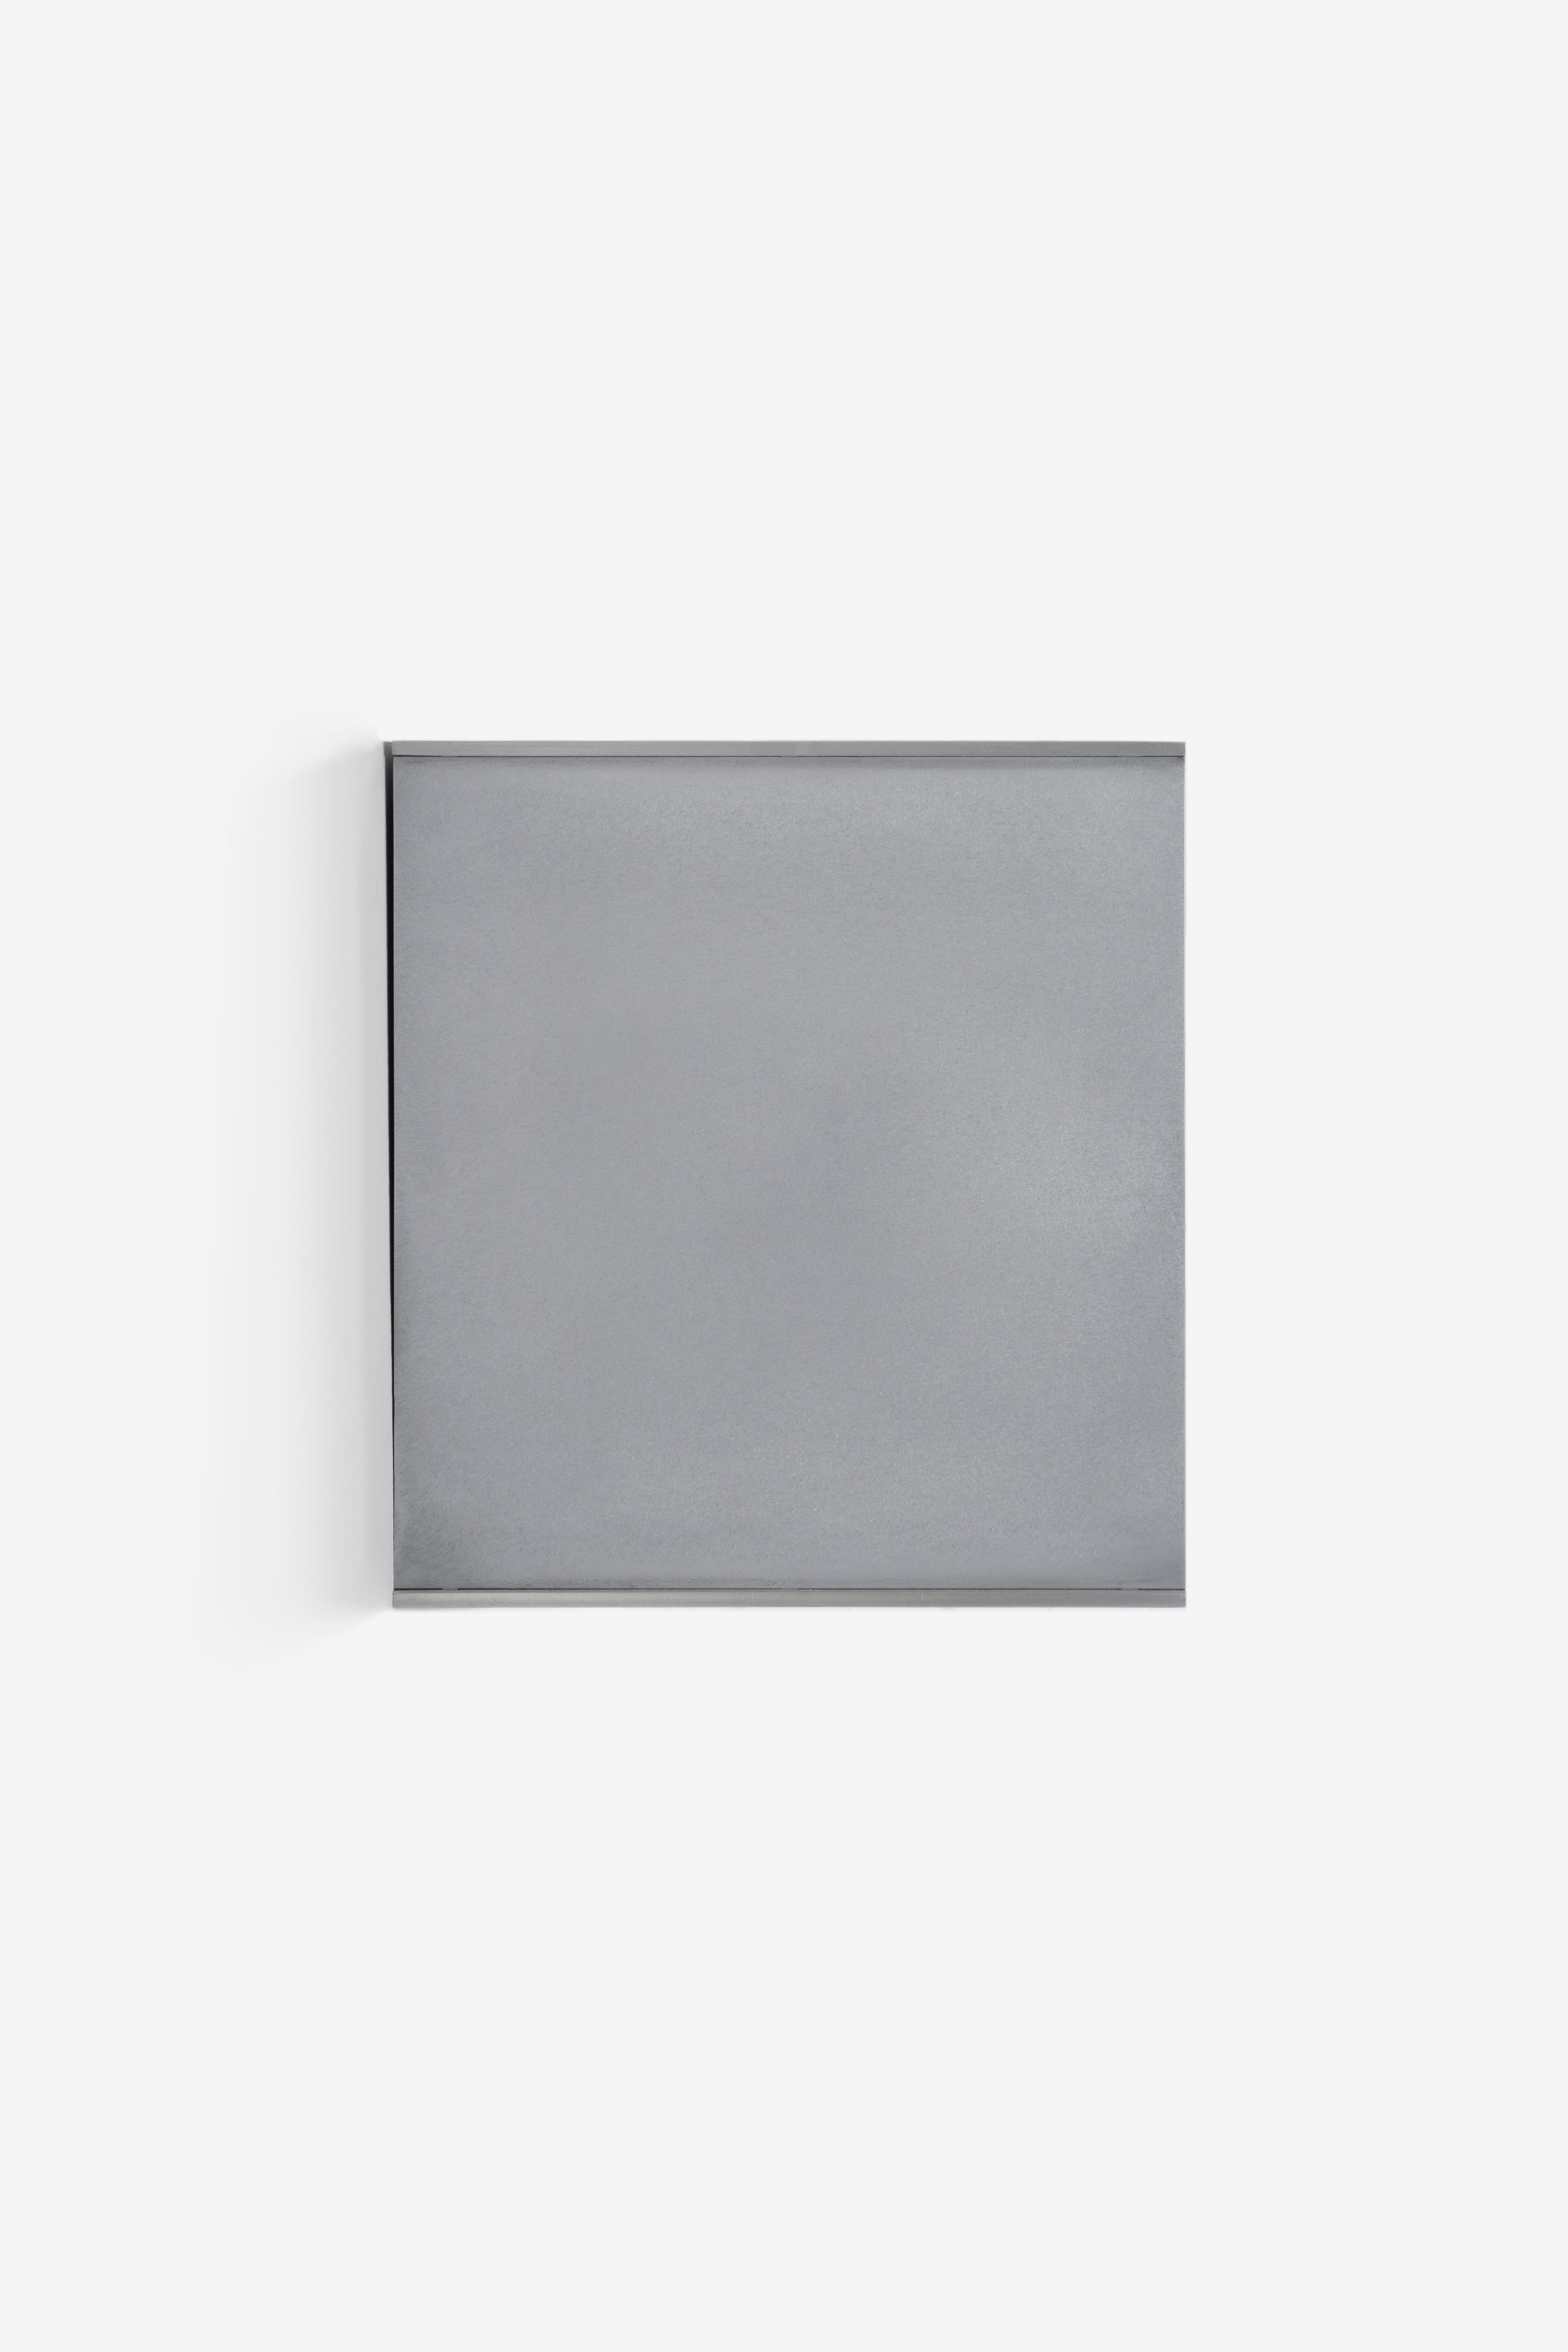 OG-Wandregal mit Schubladen in gewachstem Aluminiumblech von Jonathan Nesci im Angebot 8